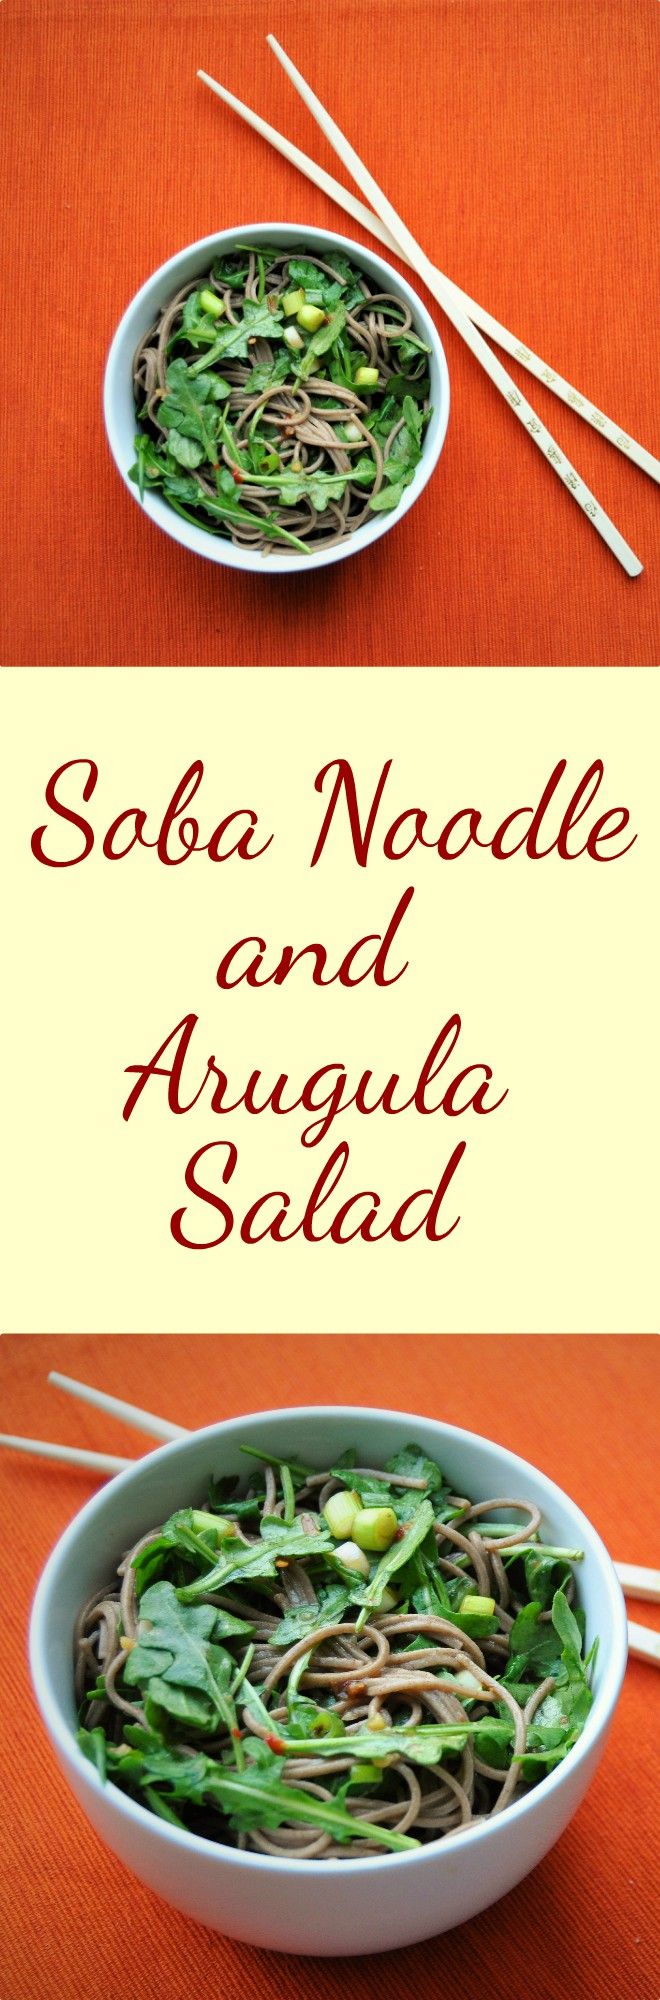 Soba Noodle and Arugula Salad